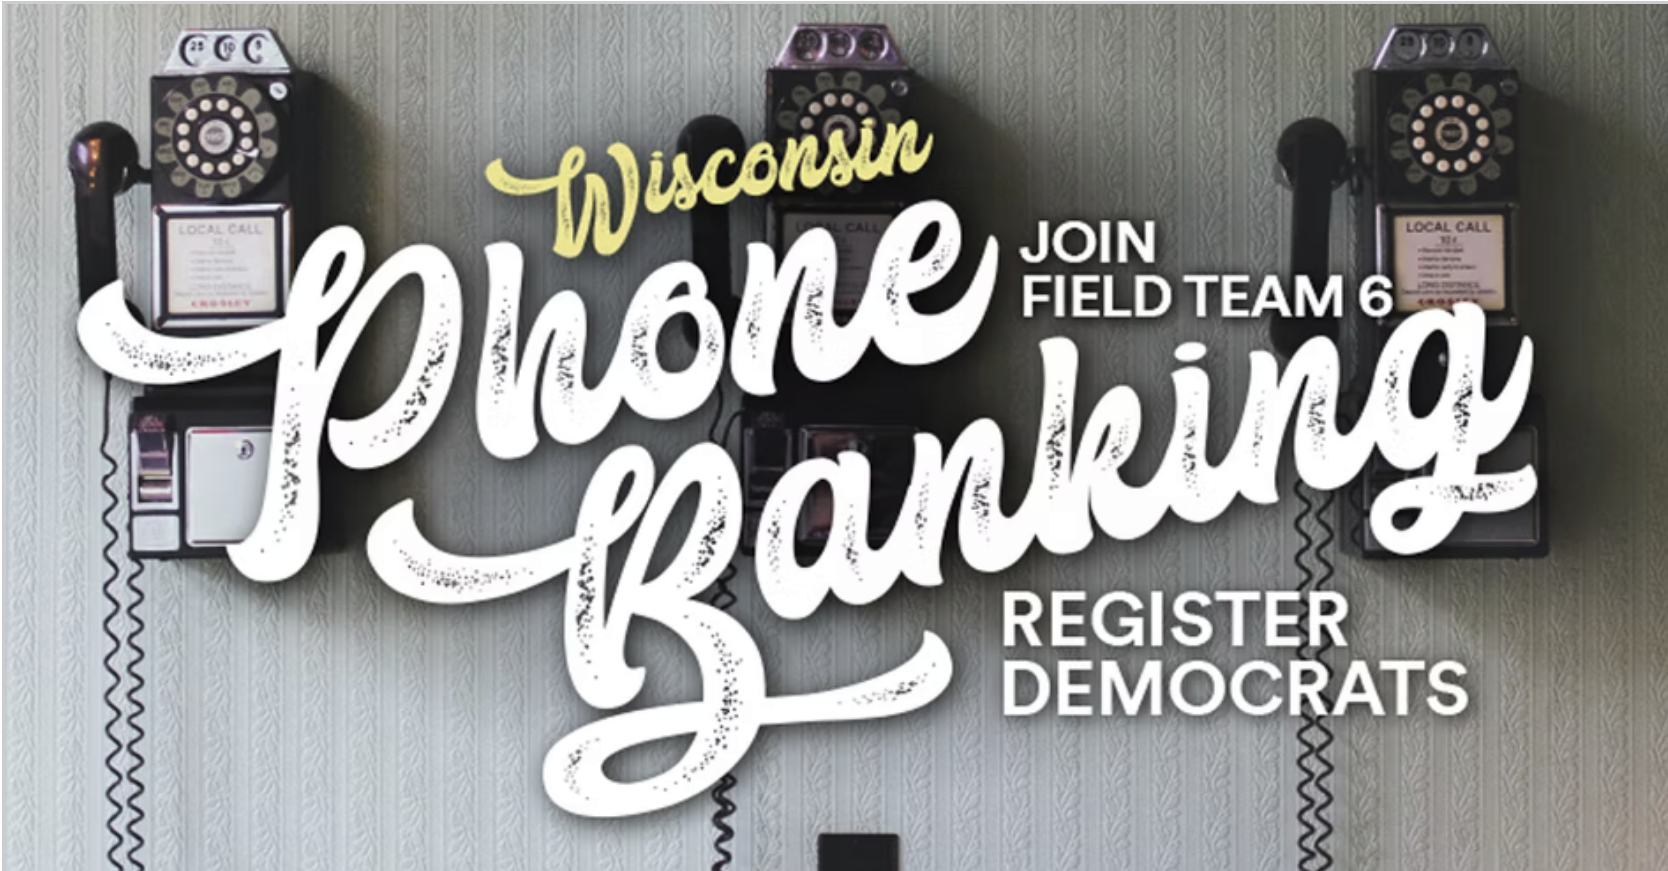 Wisconsin Phone Banking: Register Democrats